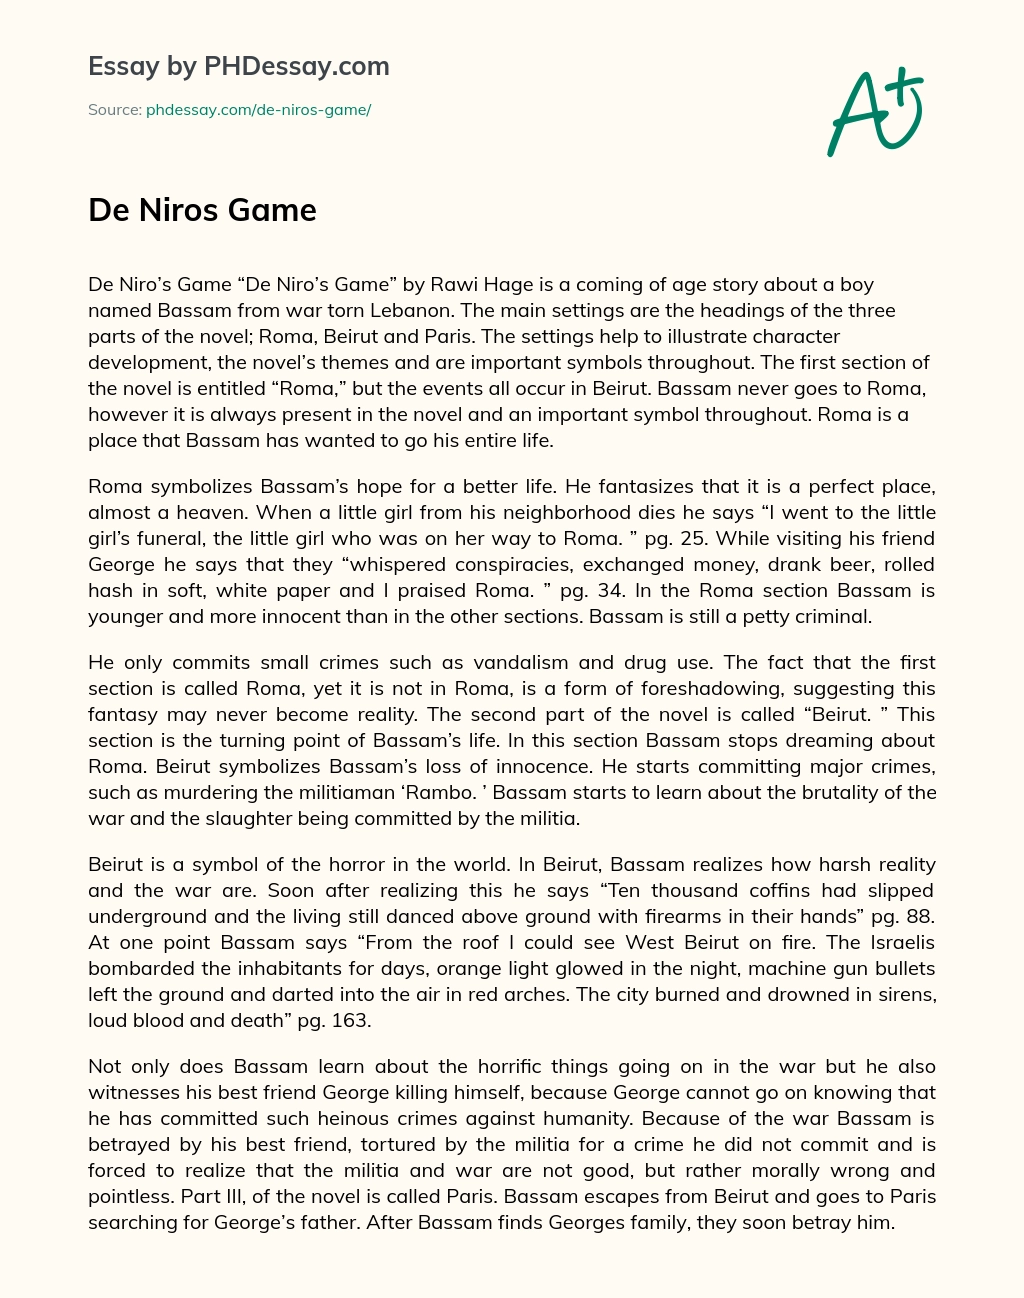 De Niros Game essay